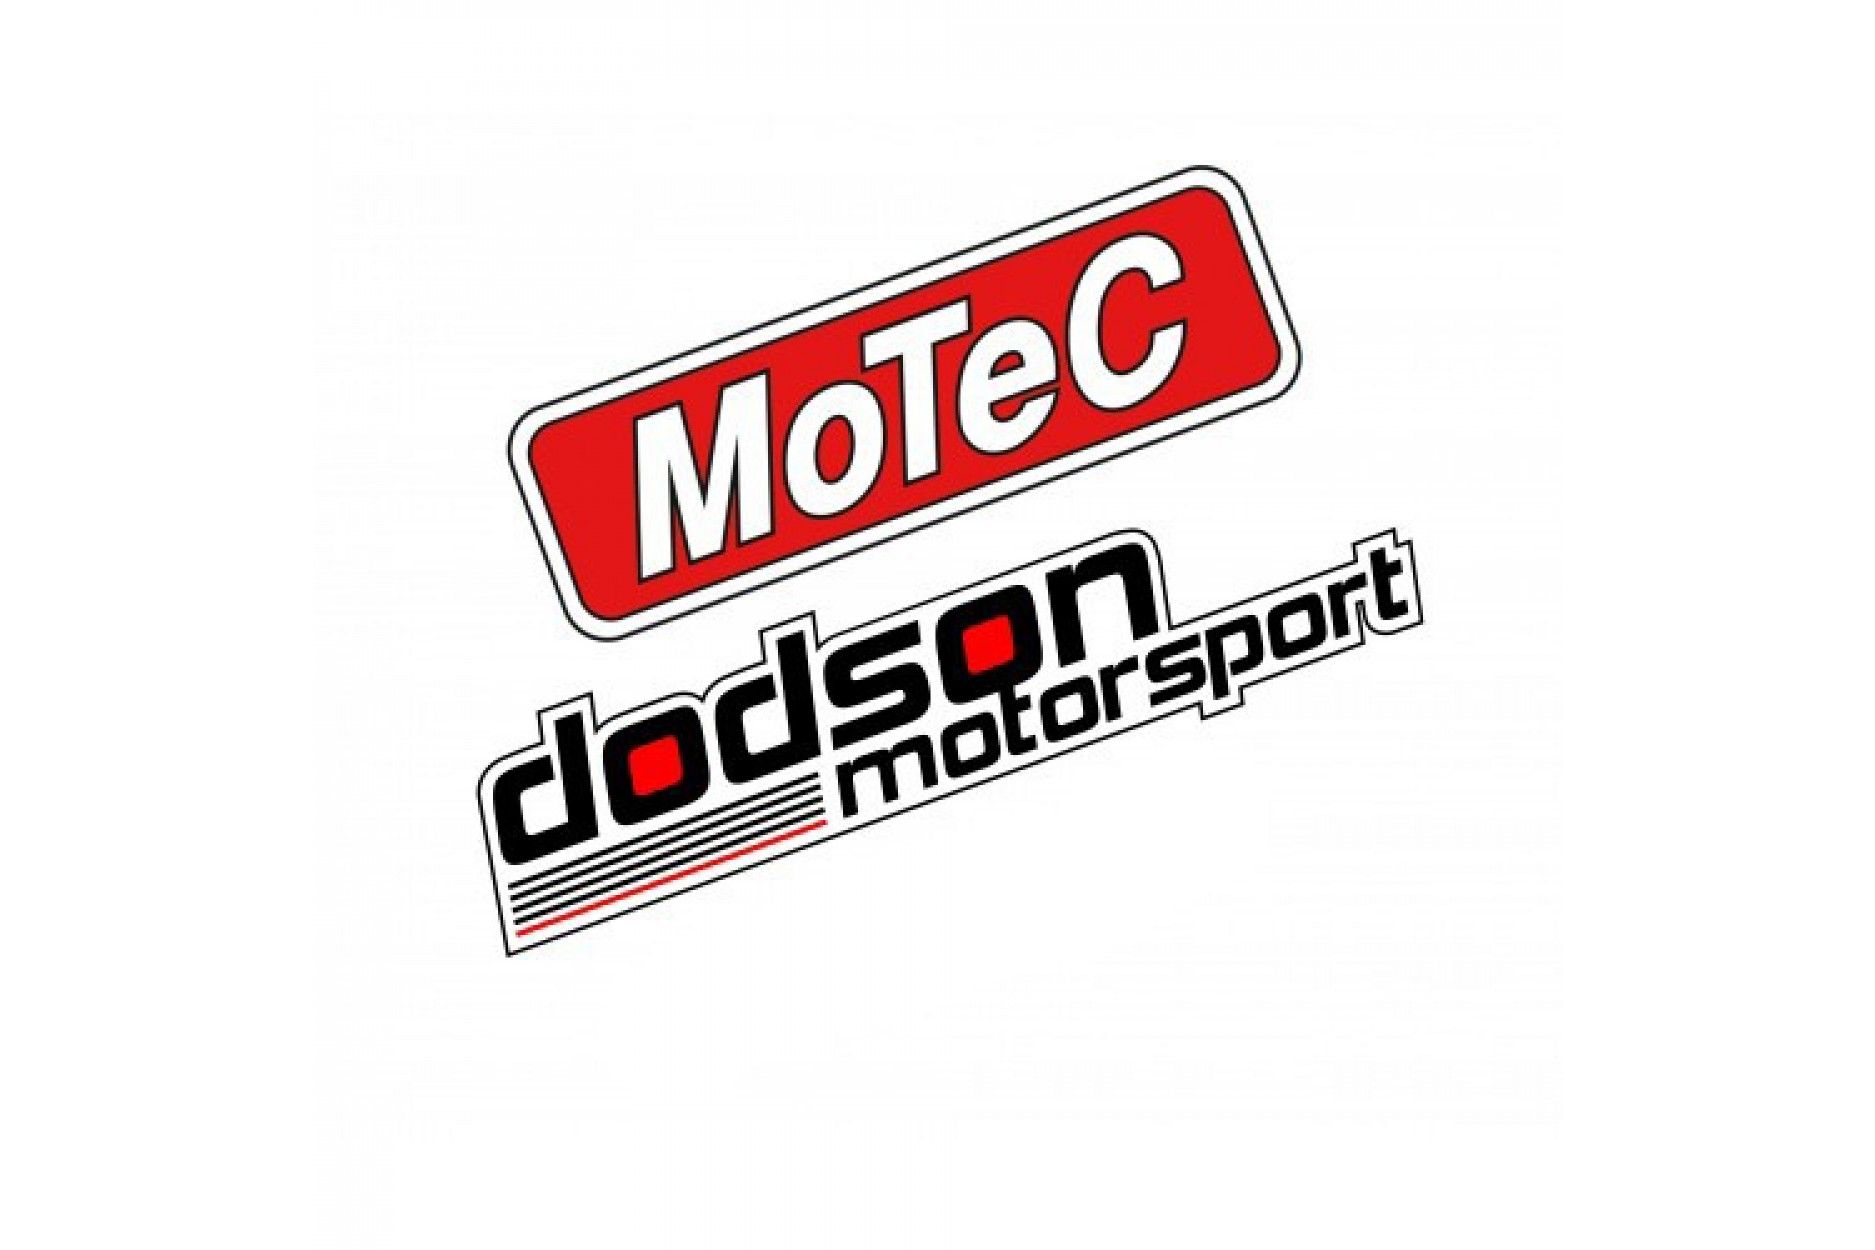 Dodson Level 5 Lizenz für Motec M1 Steuergerät Nissan GTR R35